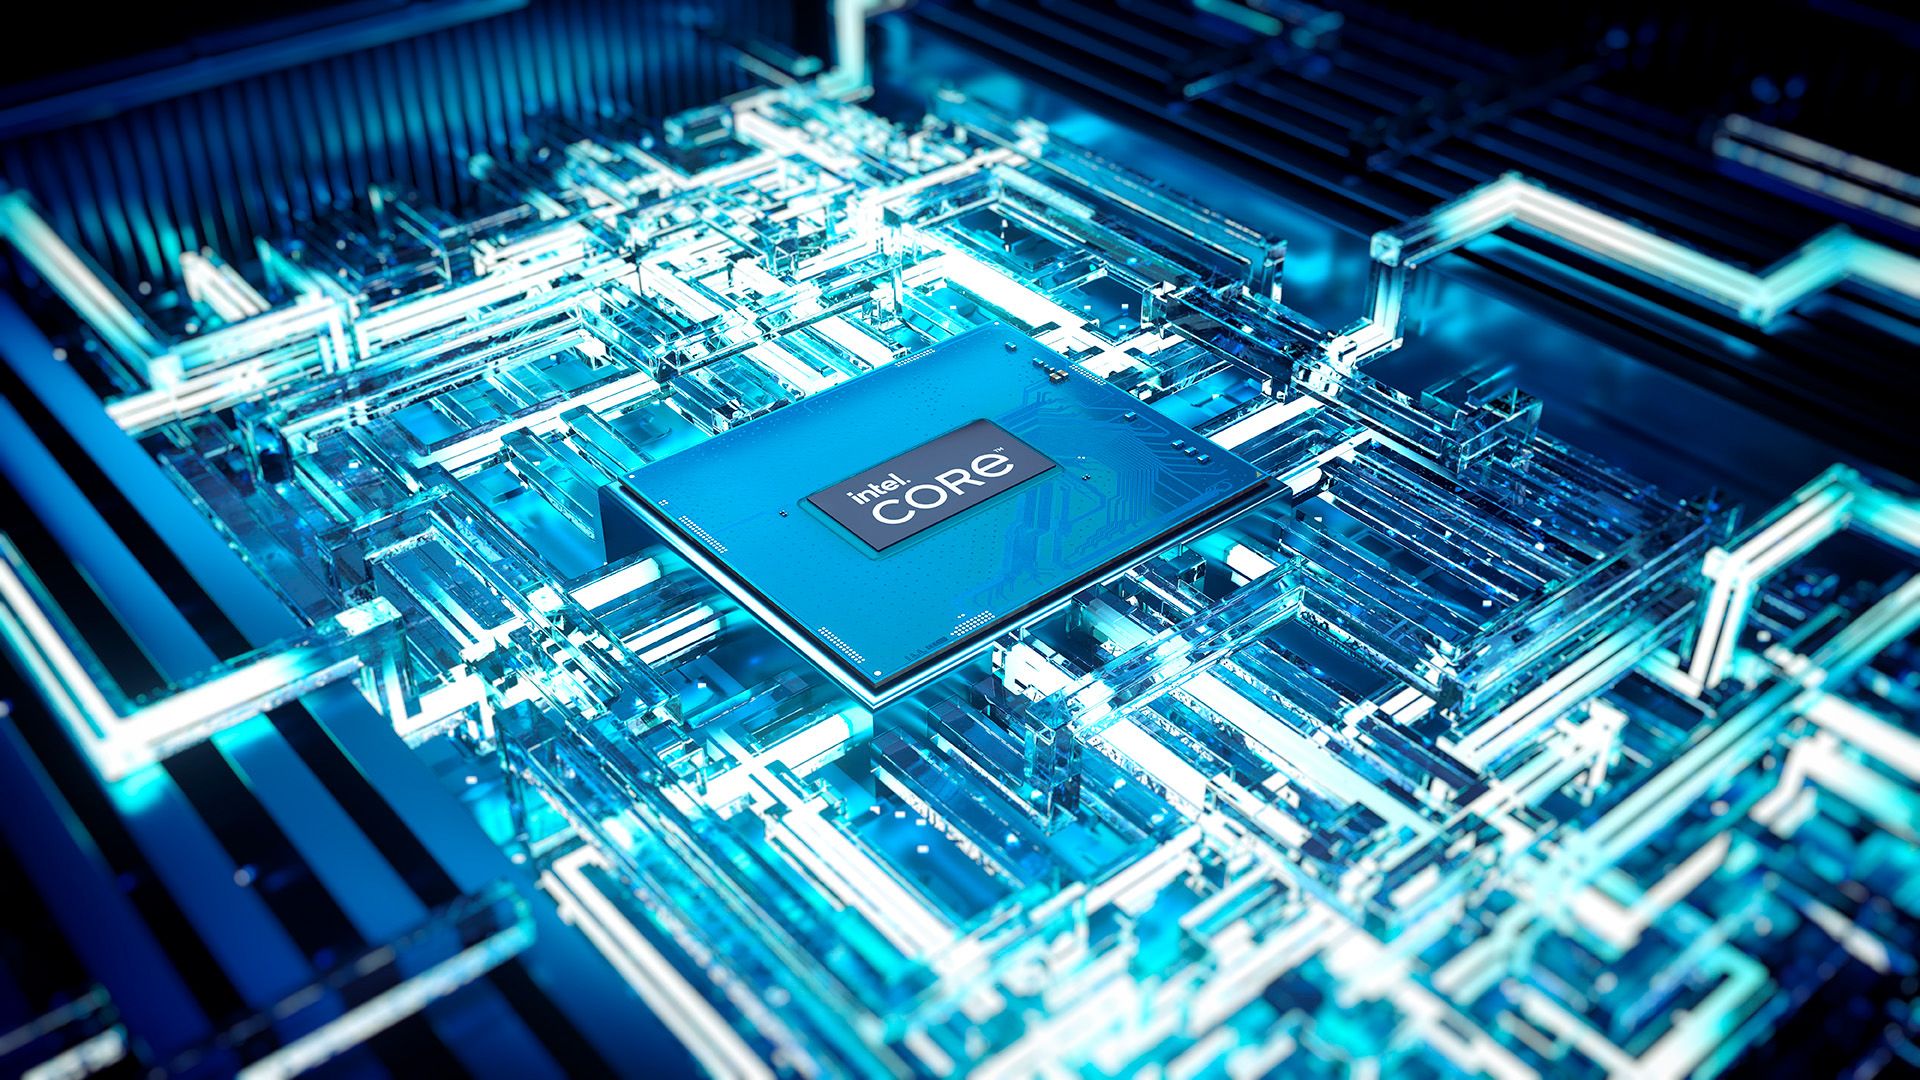 Intel Core processor on blue stylized background